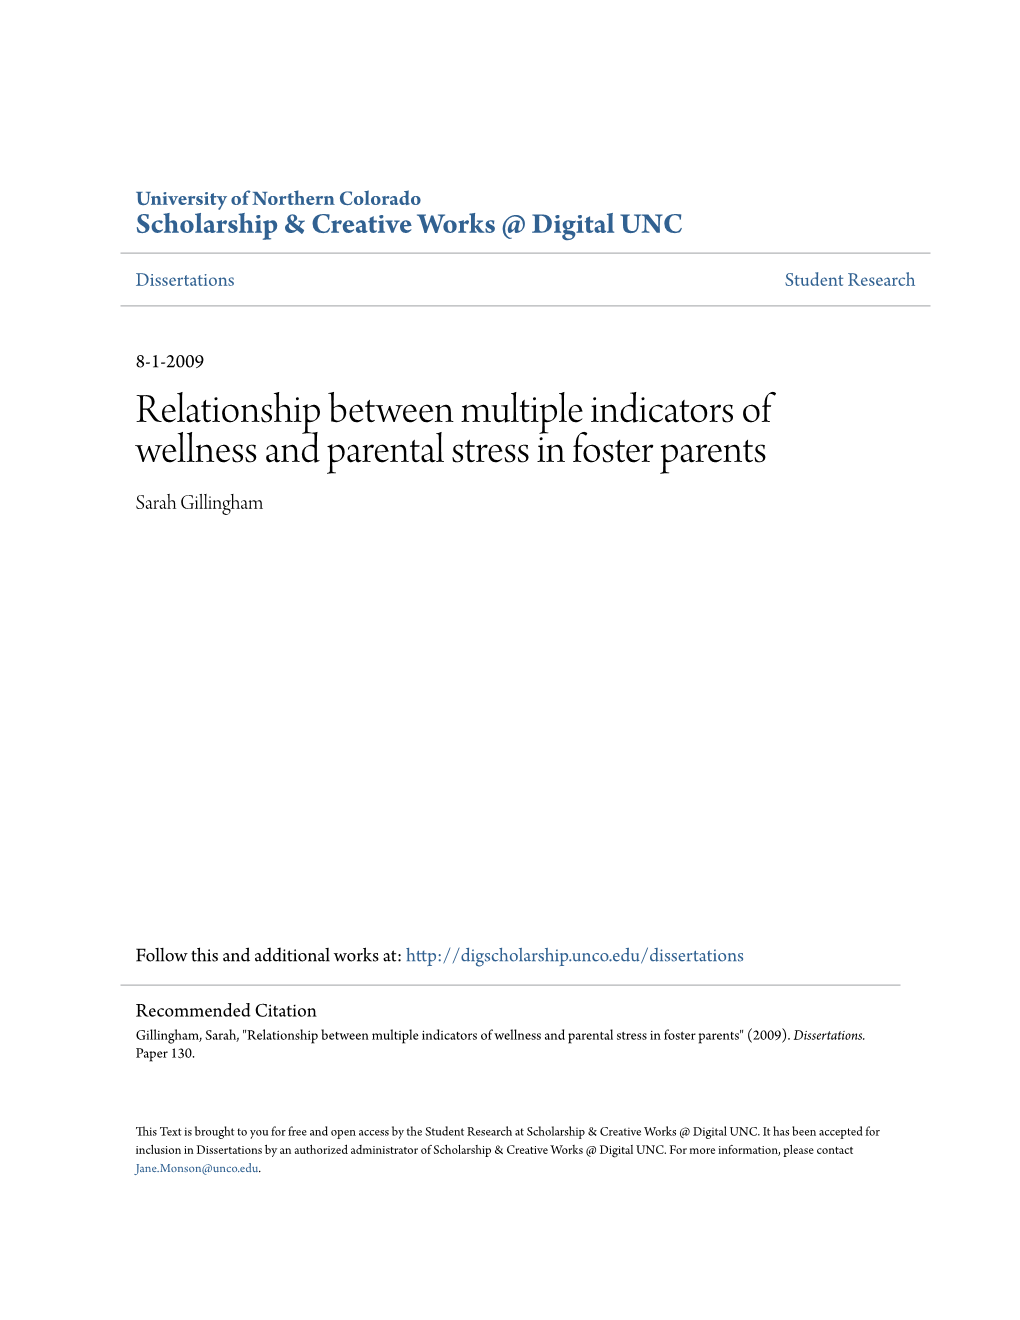 Relationship Between Multiple Indicators of Wellness and Parental Stress in Foster Parents Sarah Gillingham